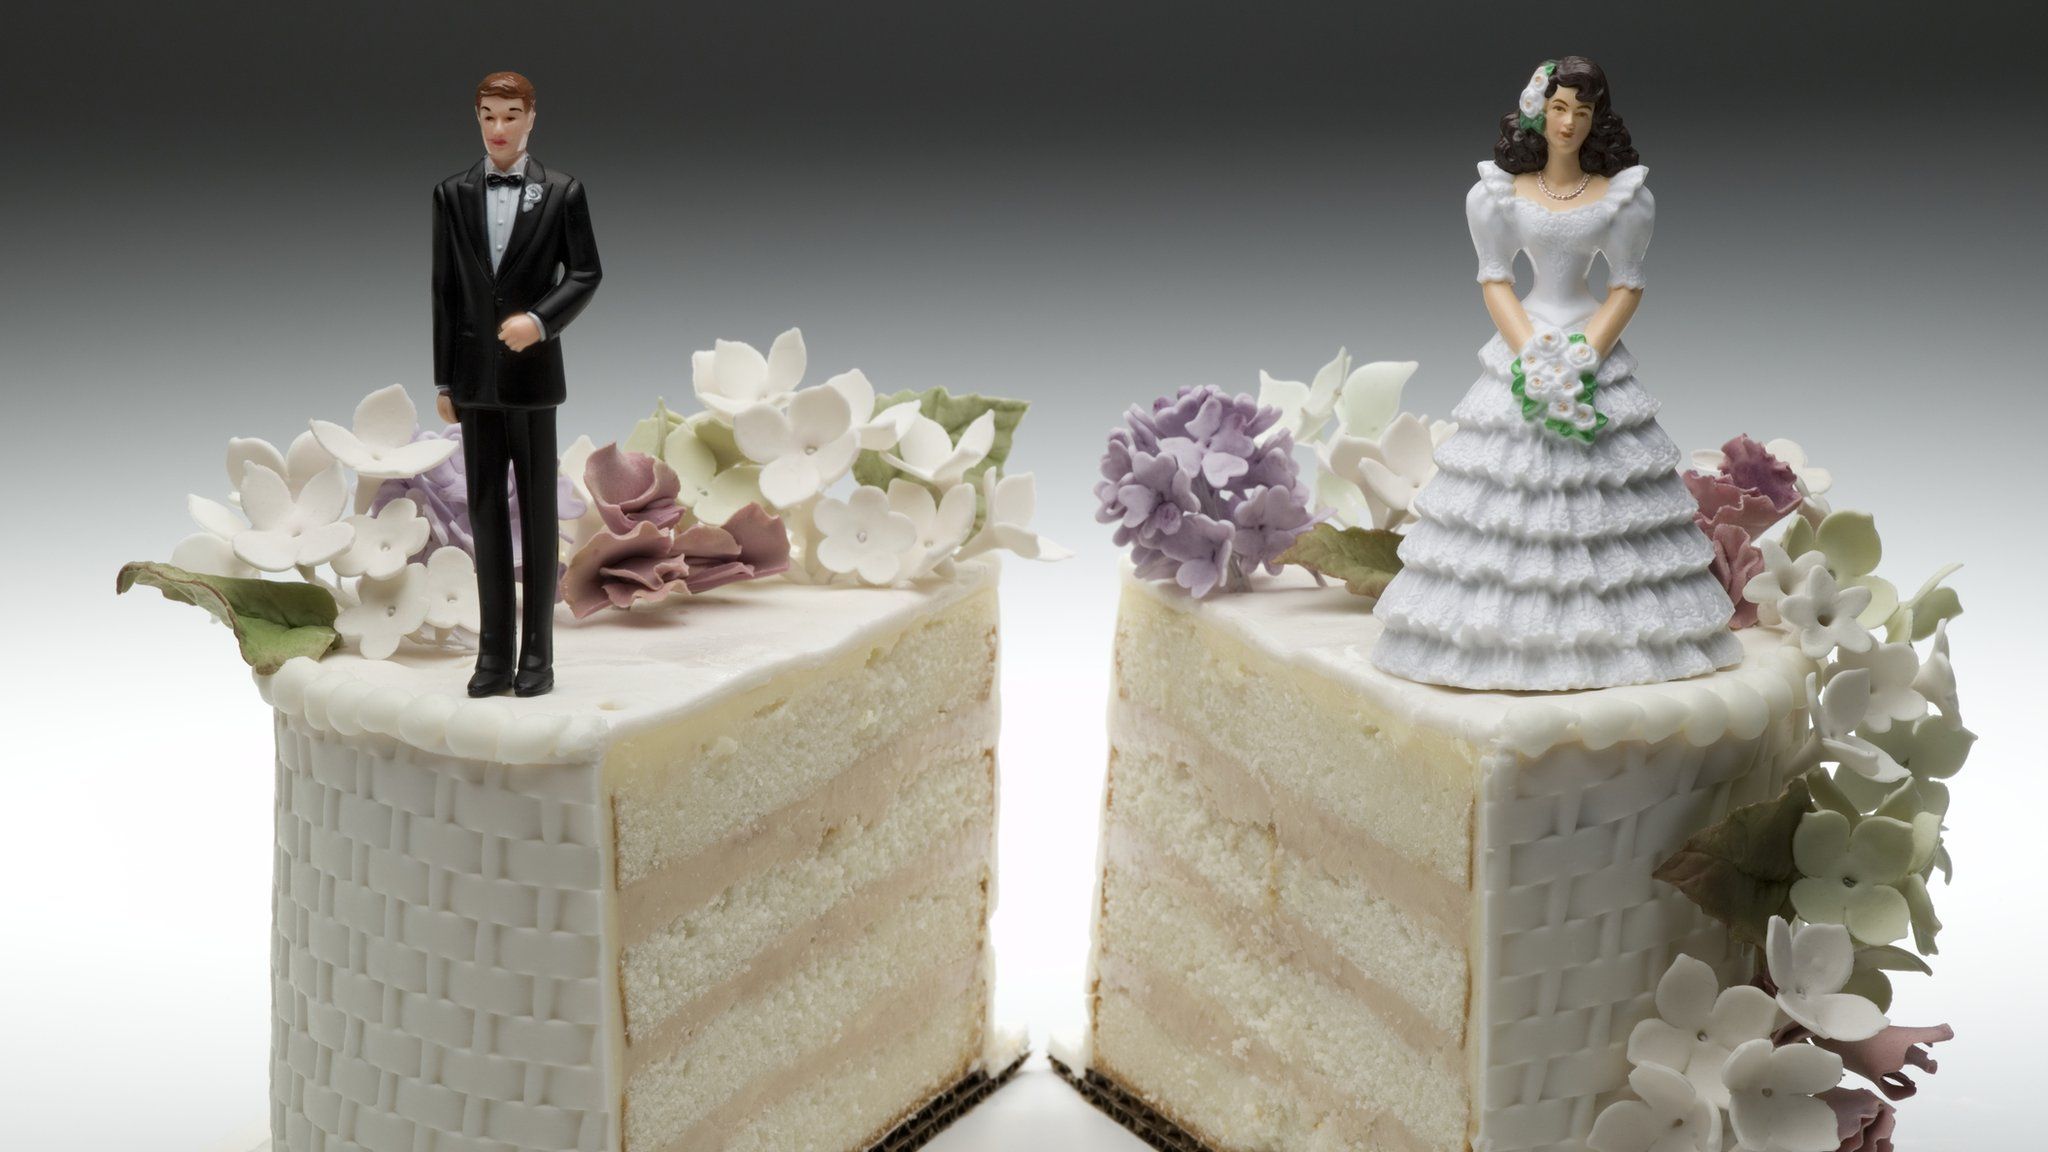 A sliced wedding cake